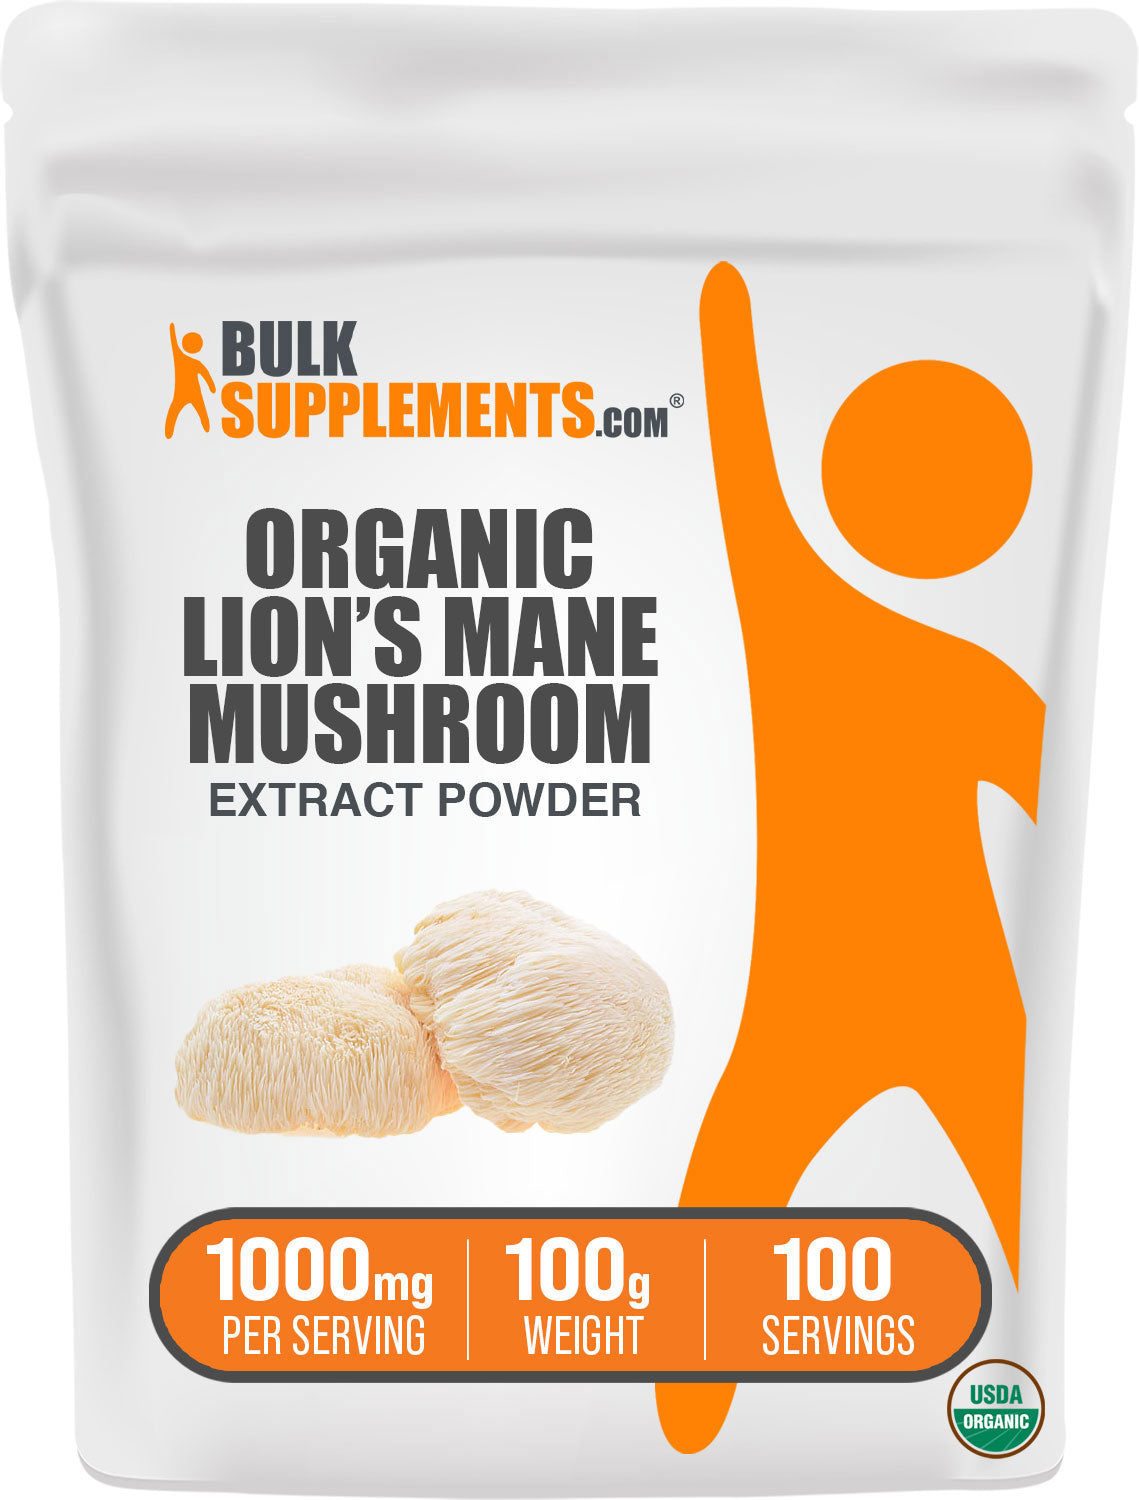 BulkSupplements.com Organic Lion's Mane Mushroom Extract Powder 100g bag